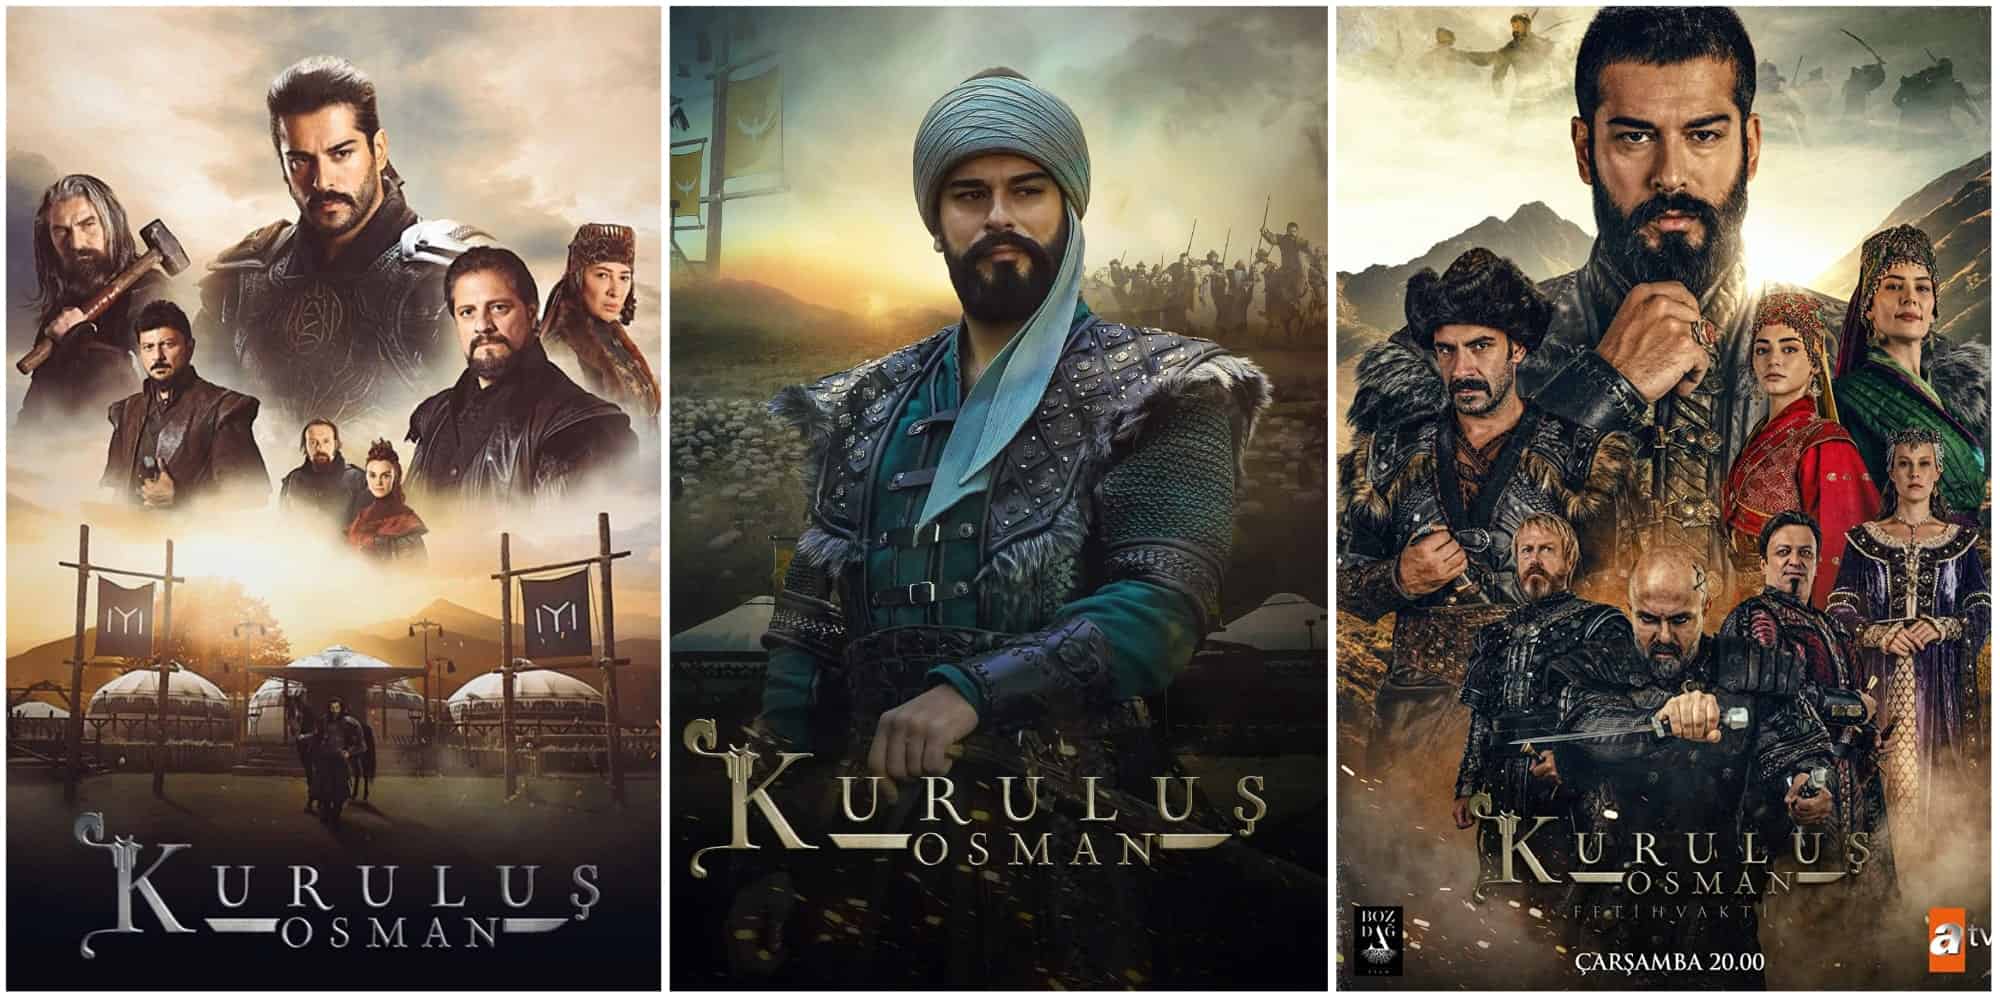 Kuruluş Osman Historical Action Turkish Series Season 4 Episode 18 Release Date